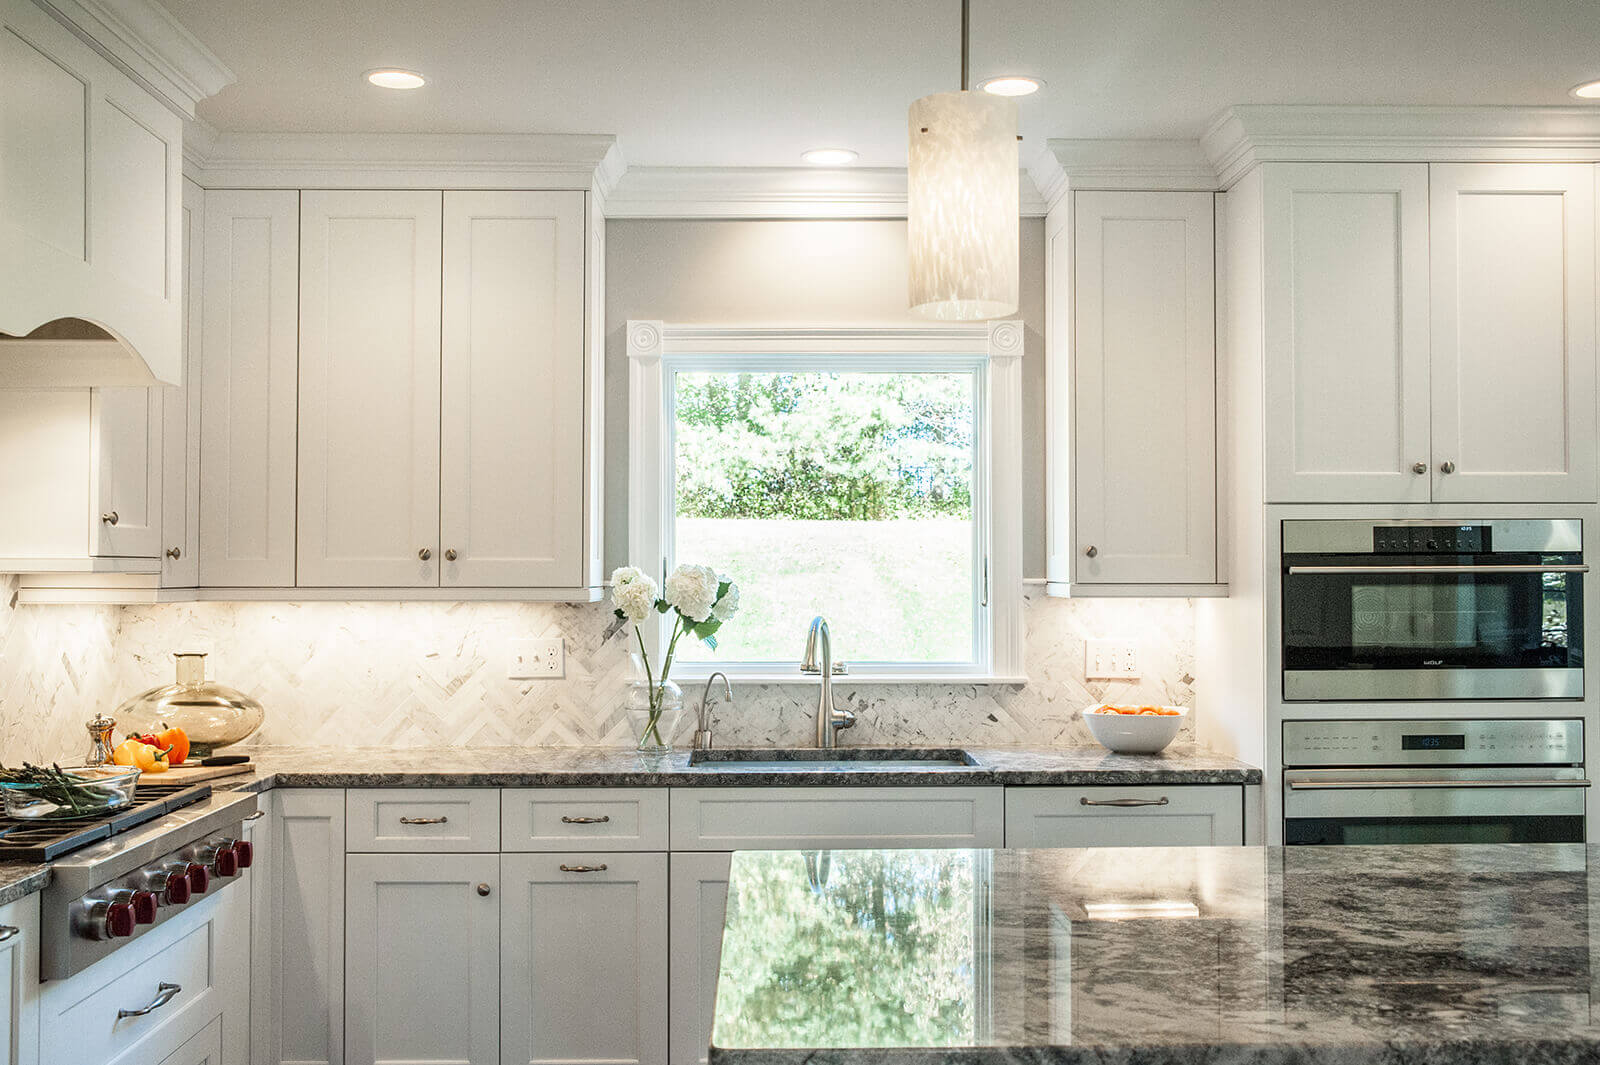 White Kitchen With White Appliances Photos - The Best Home Design